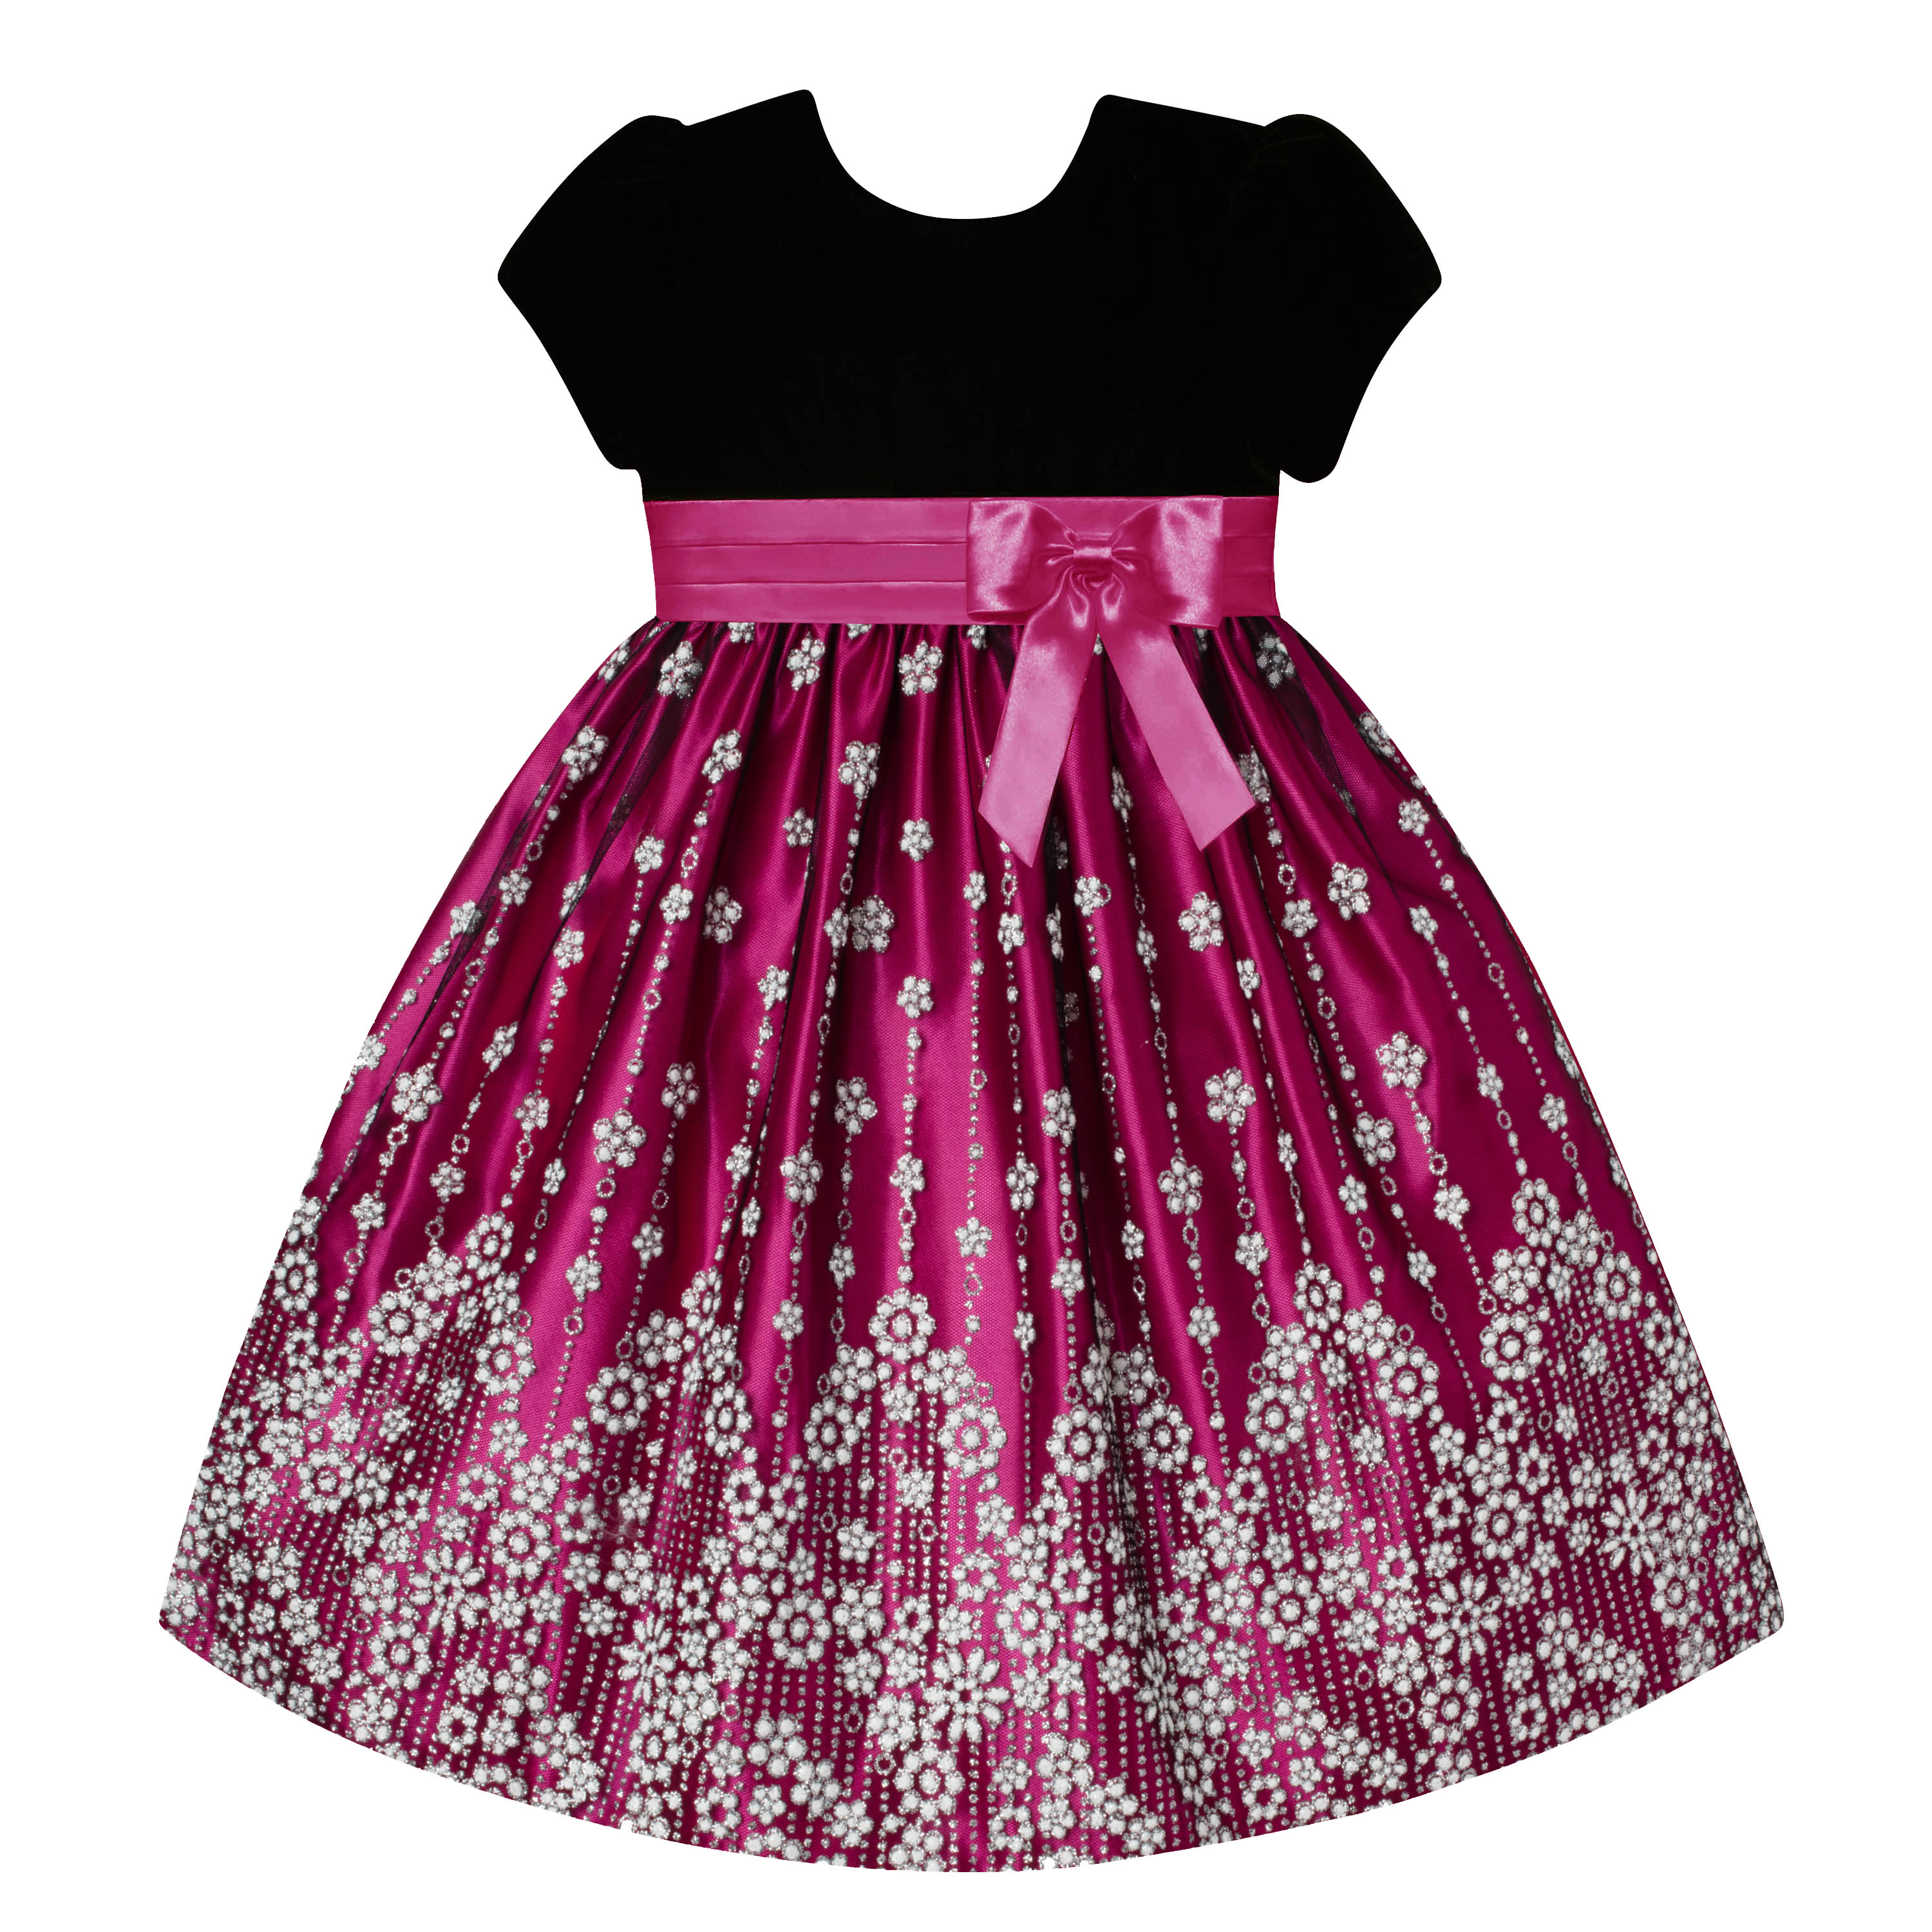 Love Infant & Toddler Girl's Party Dress - Floral